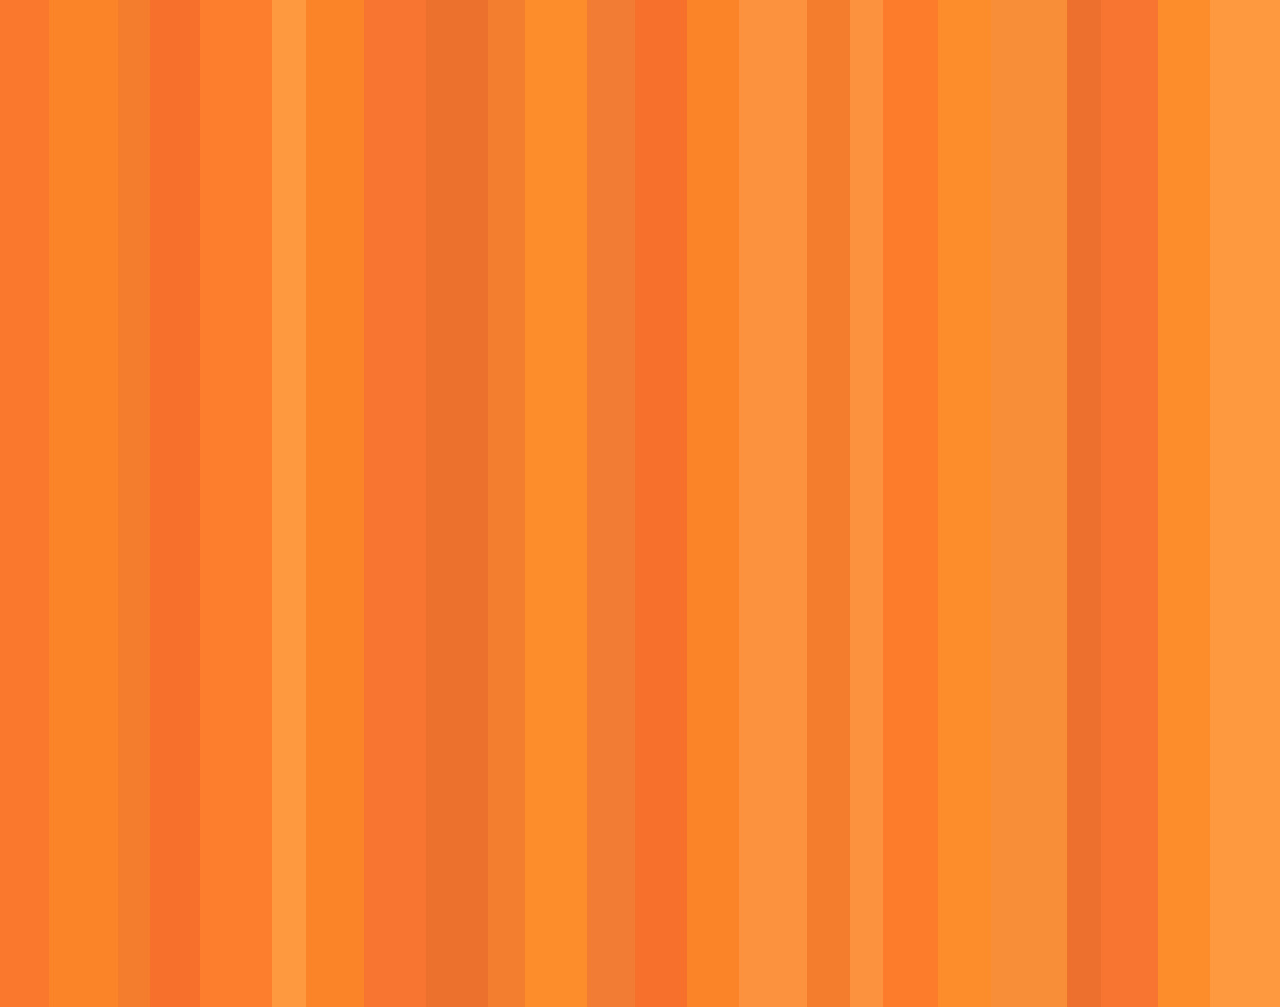 Pumpkin Stripes Backgrounds